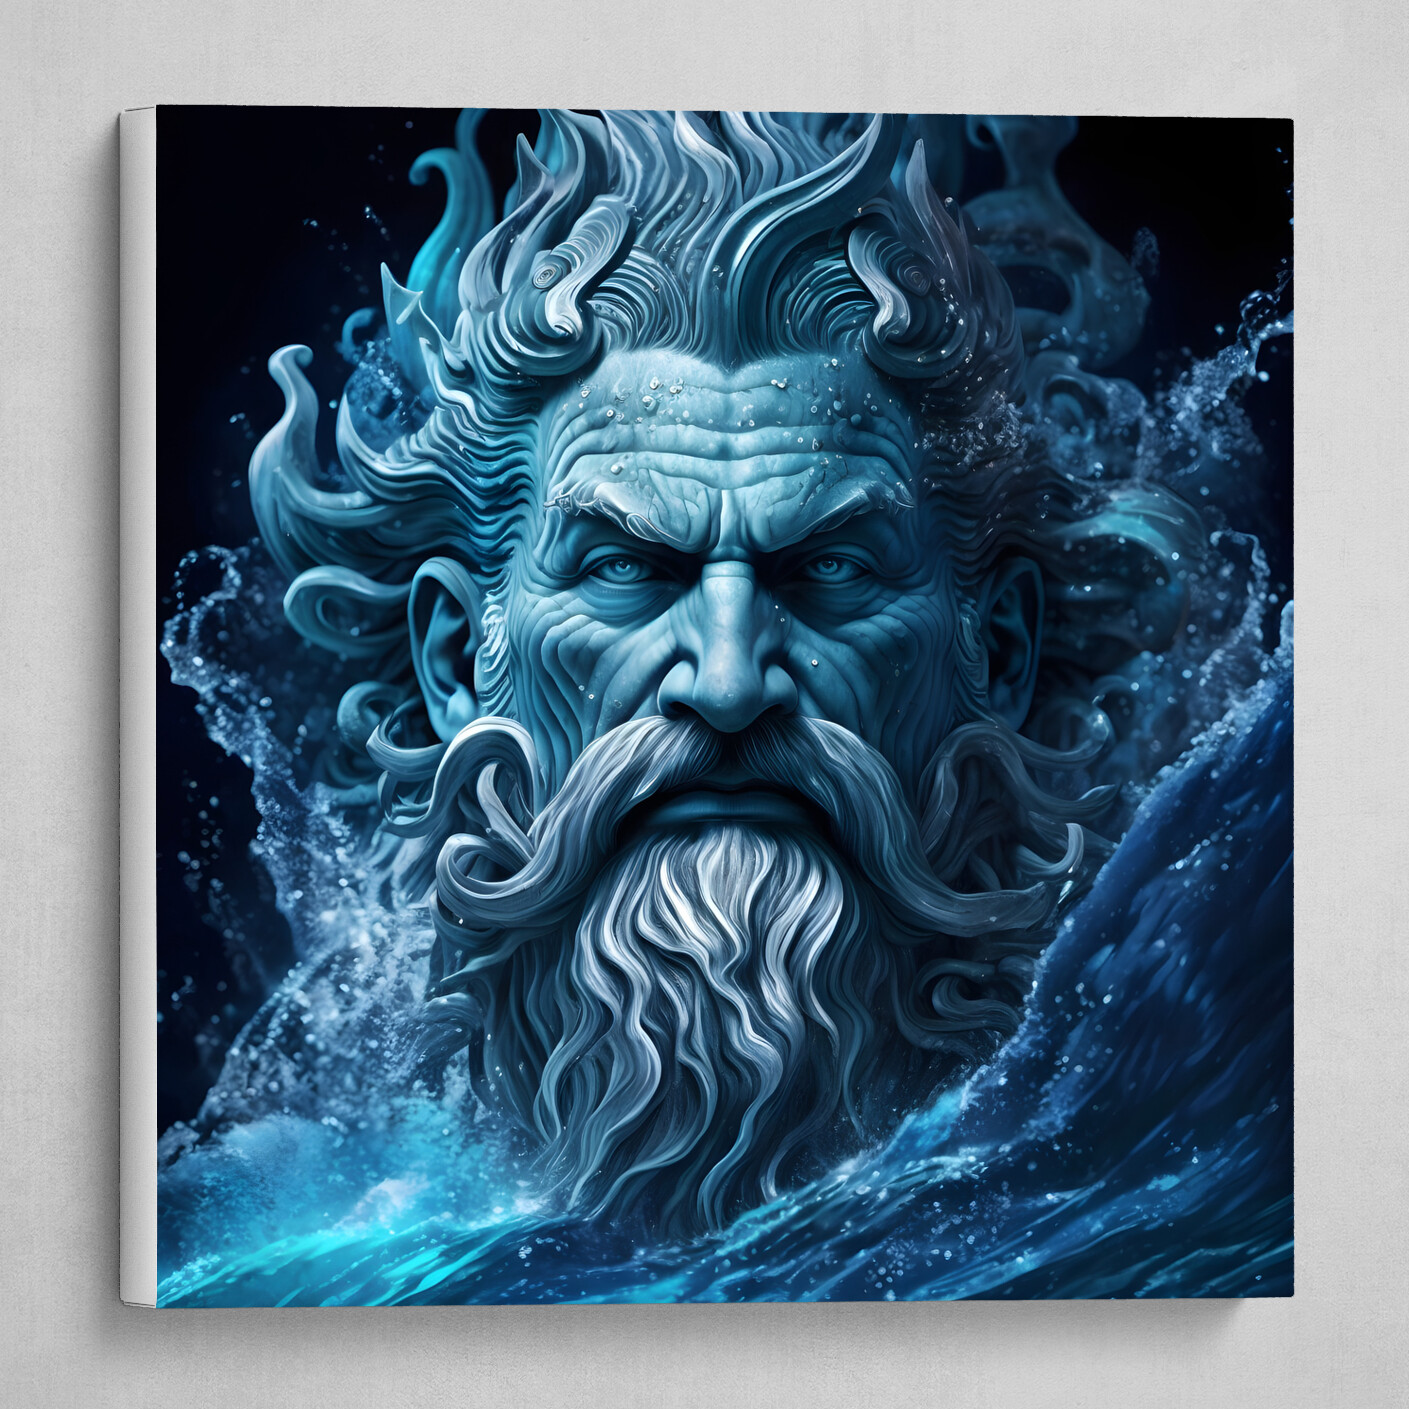 Poseidon - The Earth Shaker